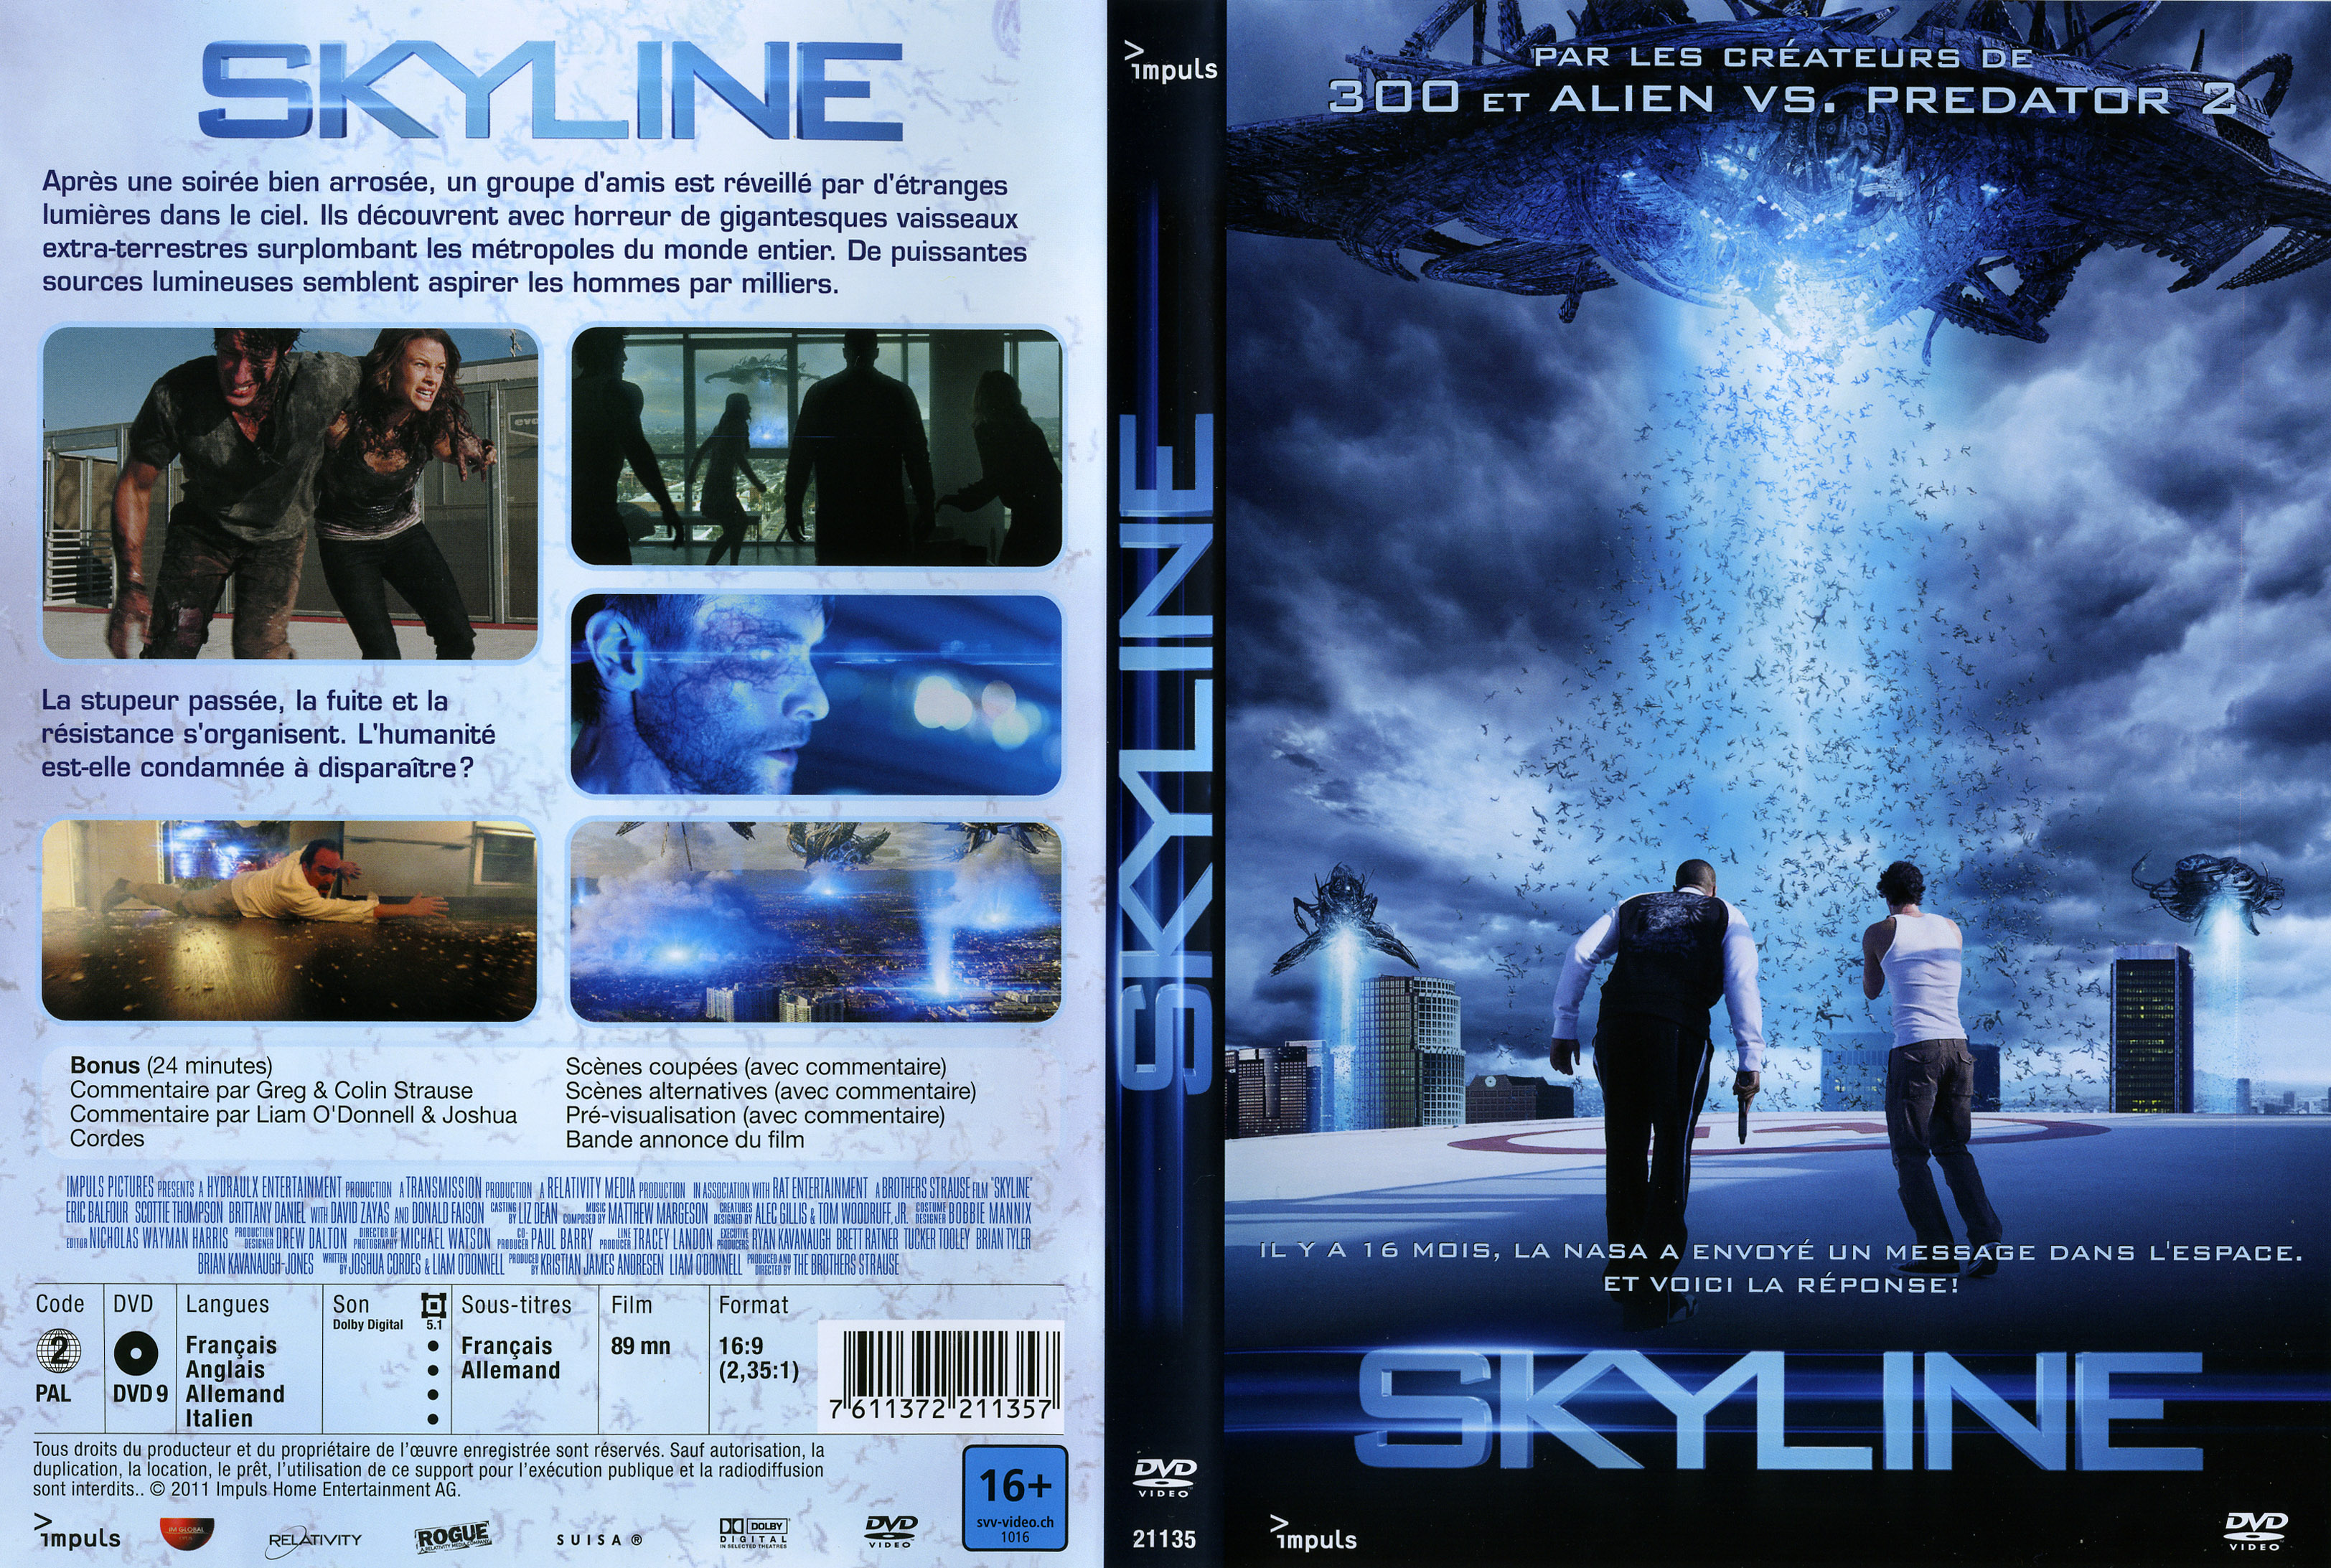 Jaquette DVD Skyline